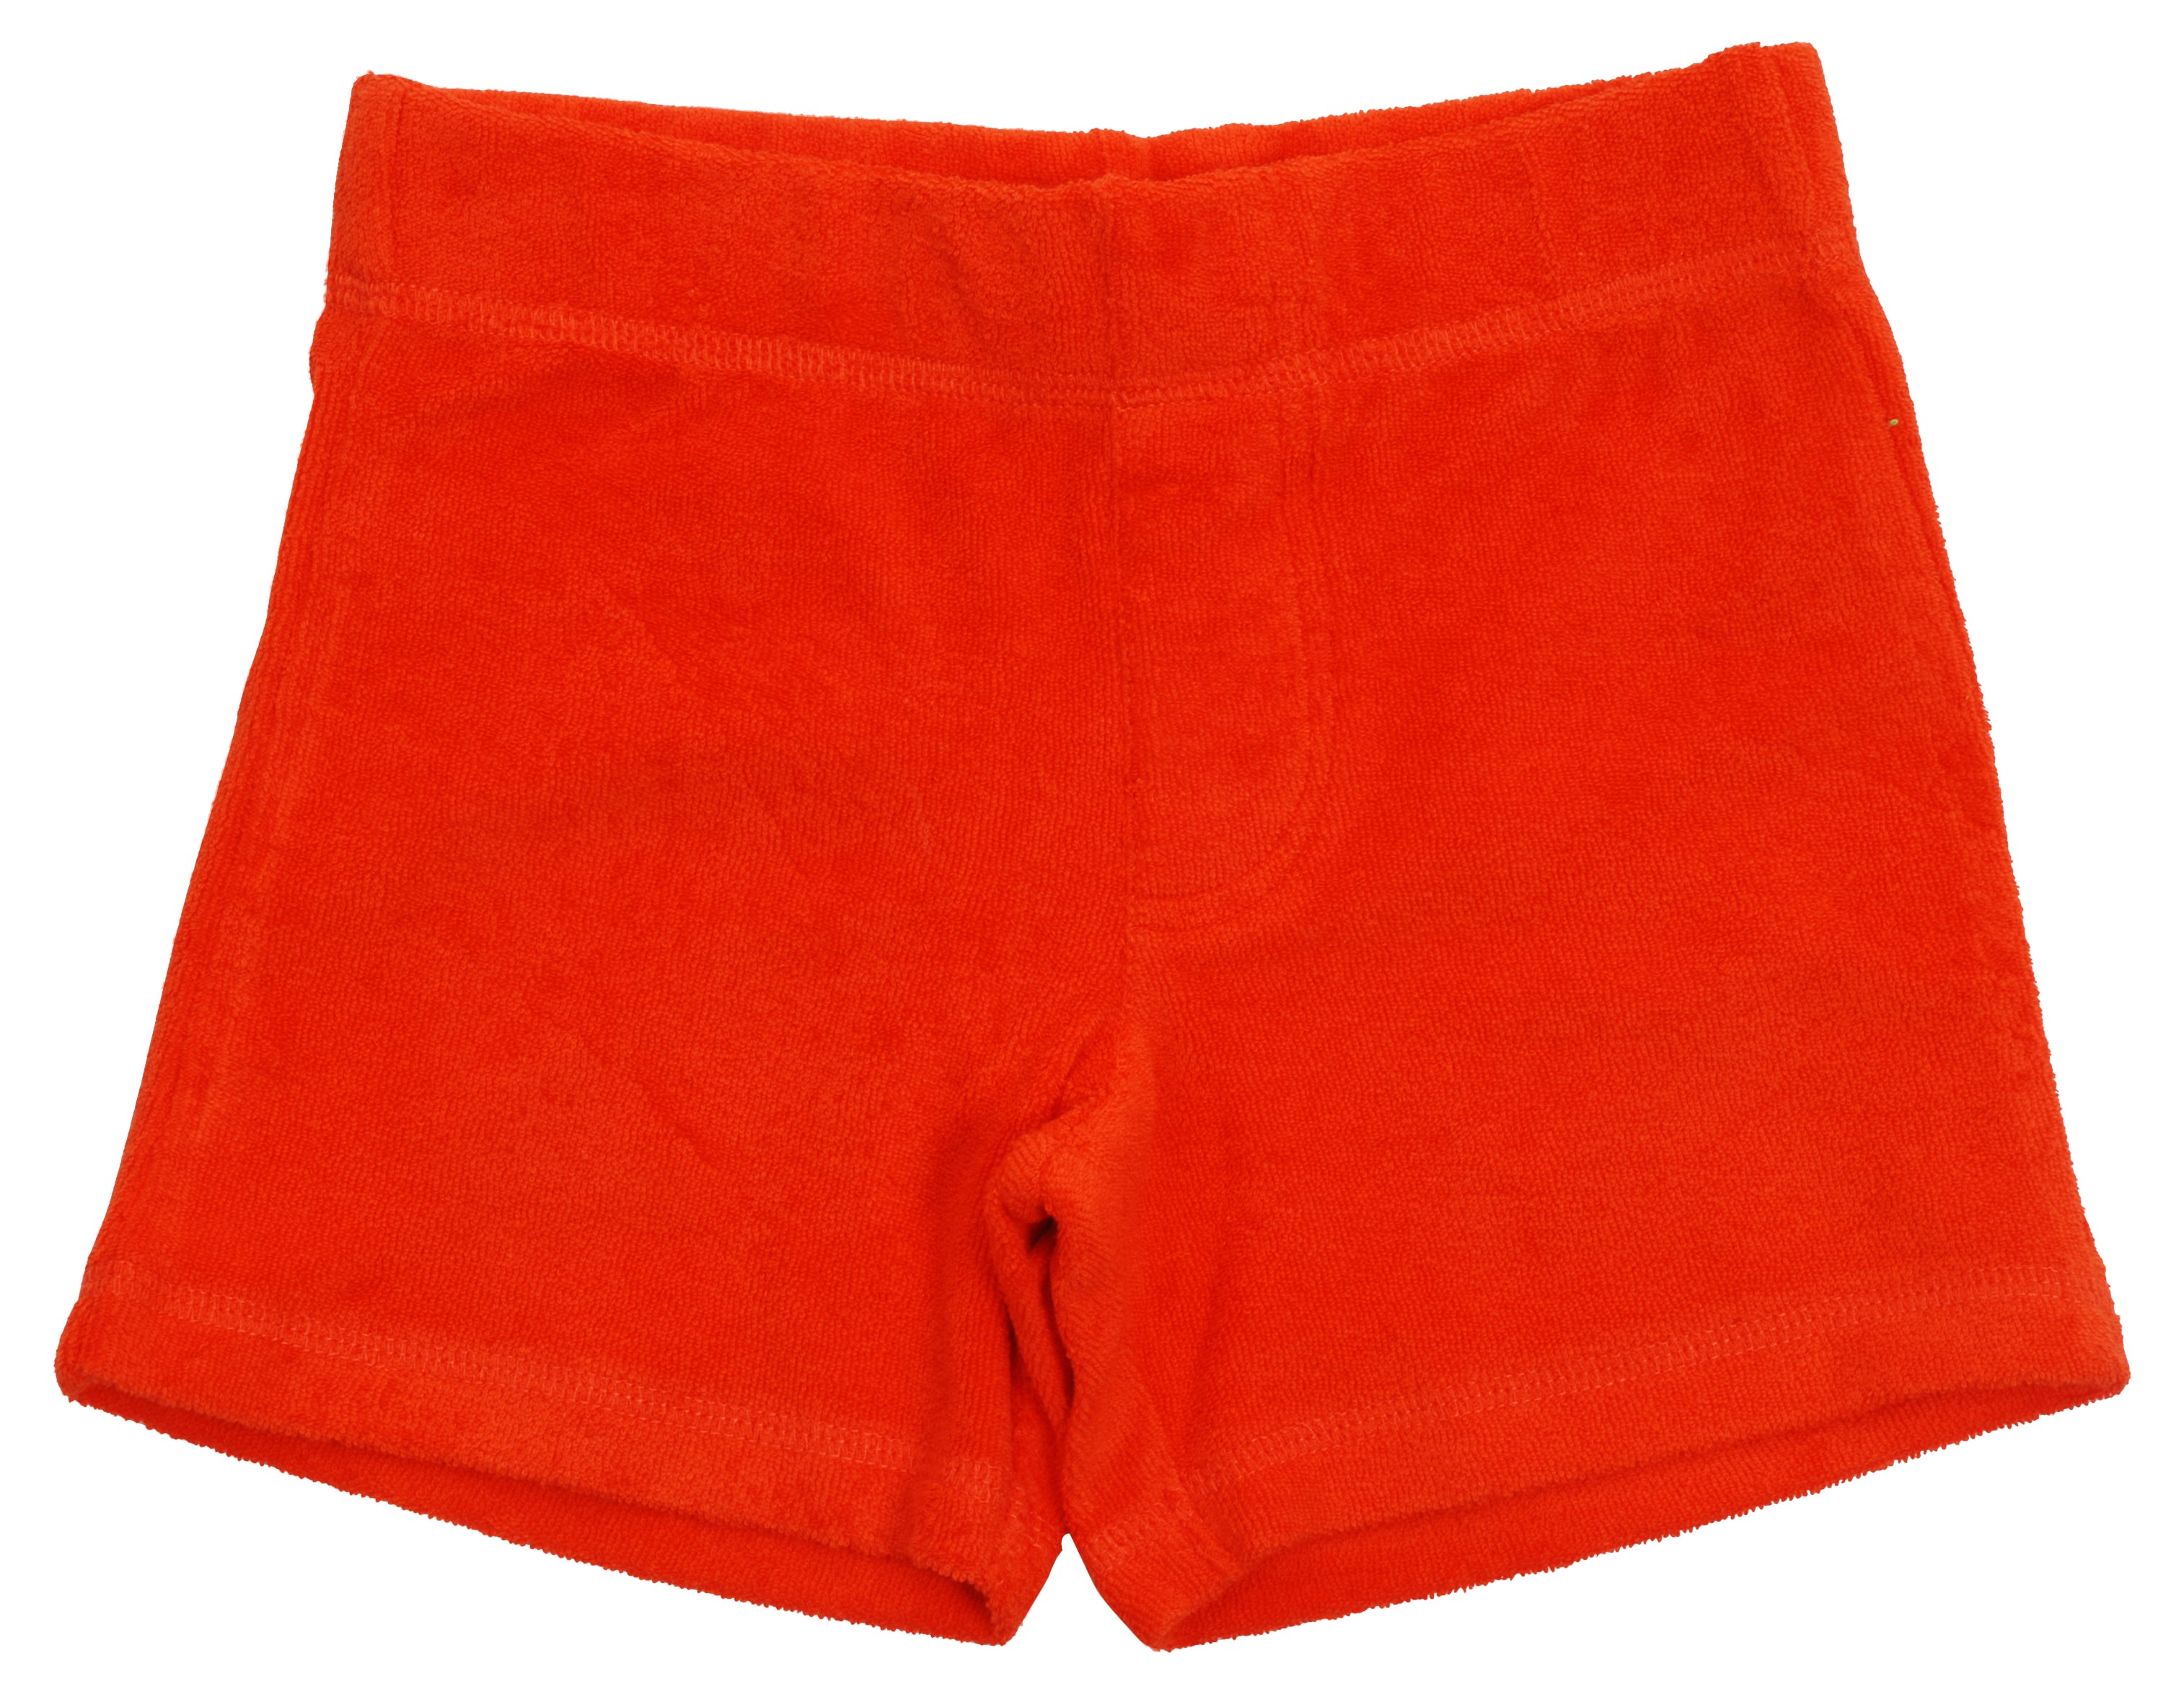 Duns Sweden - Shorts - Terry Cotton - Cherry Tomato